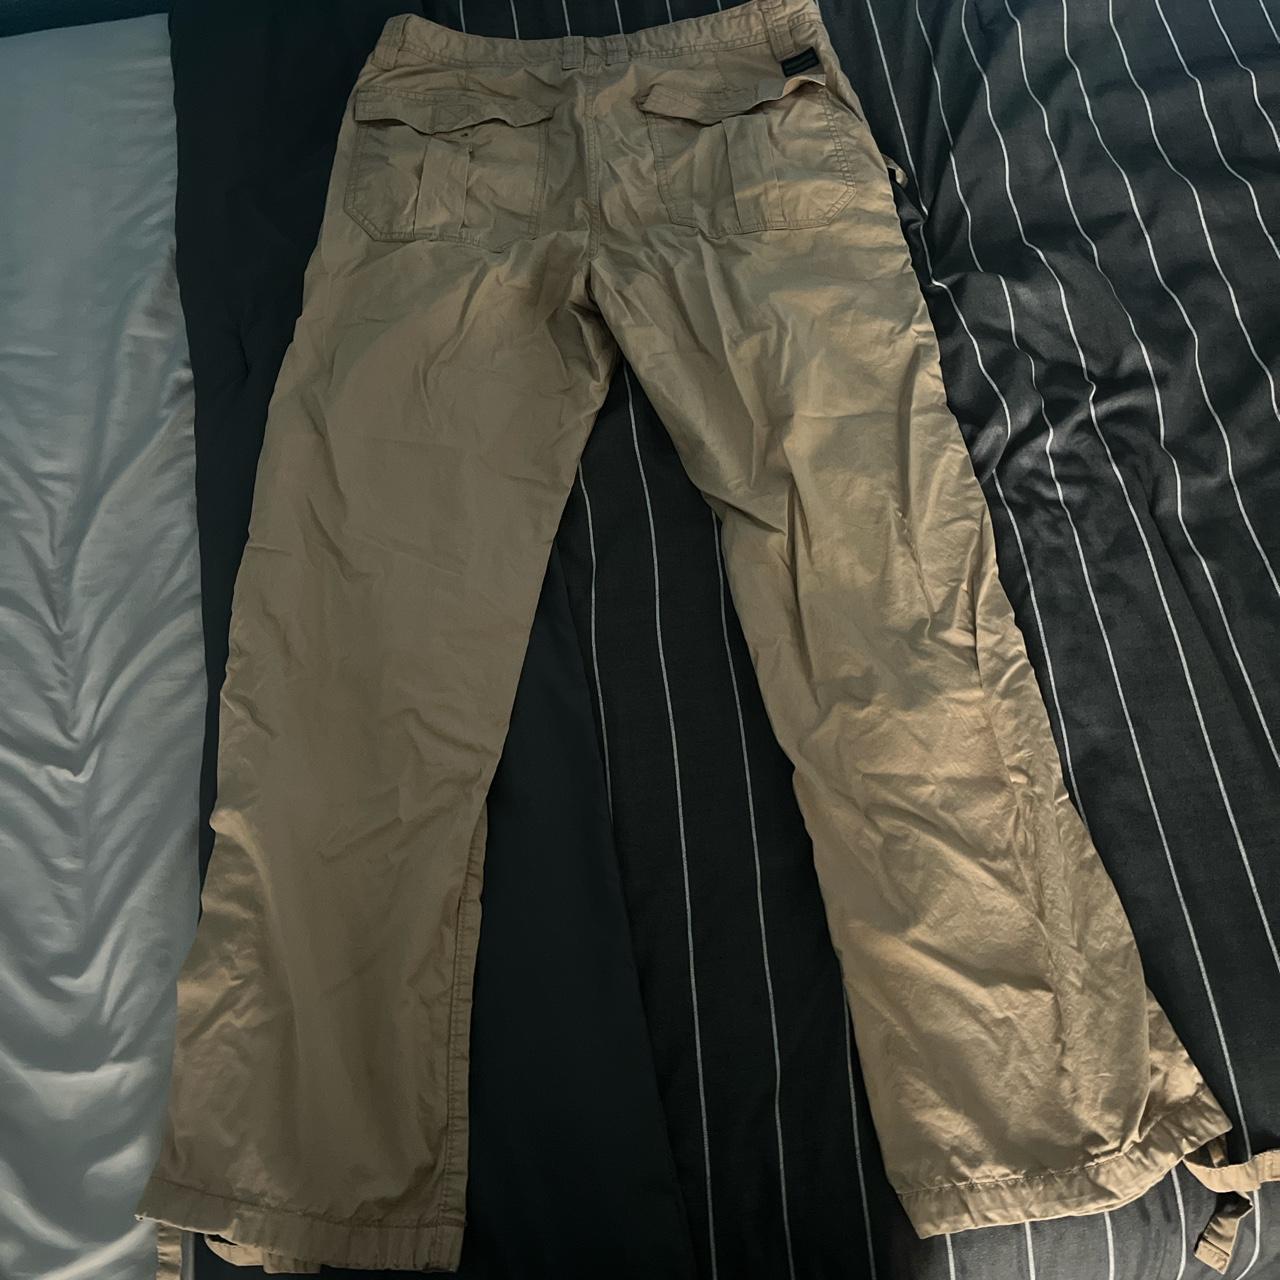 Large Sean John cargo pants like new condition - Depop